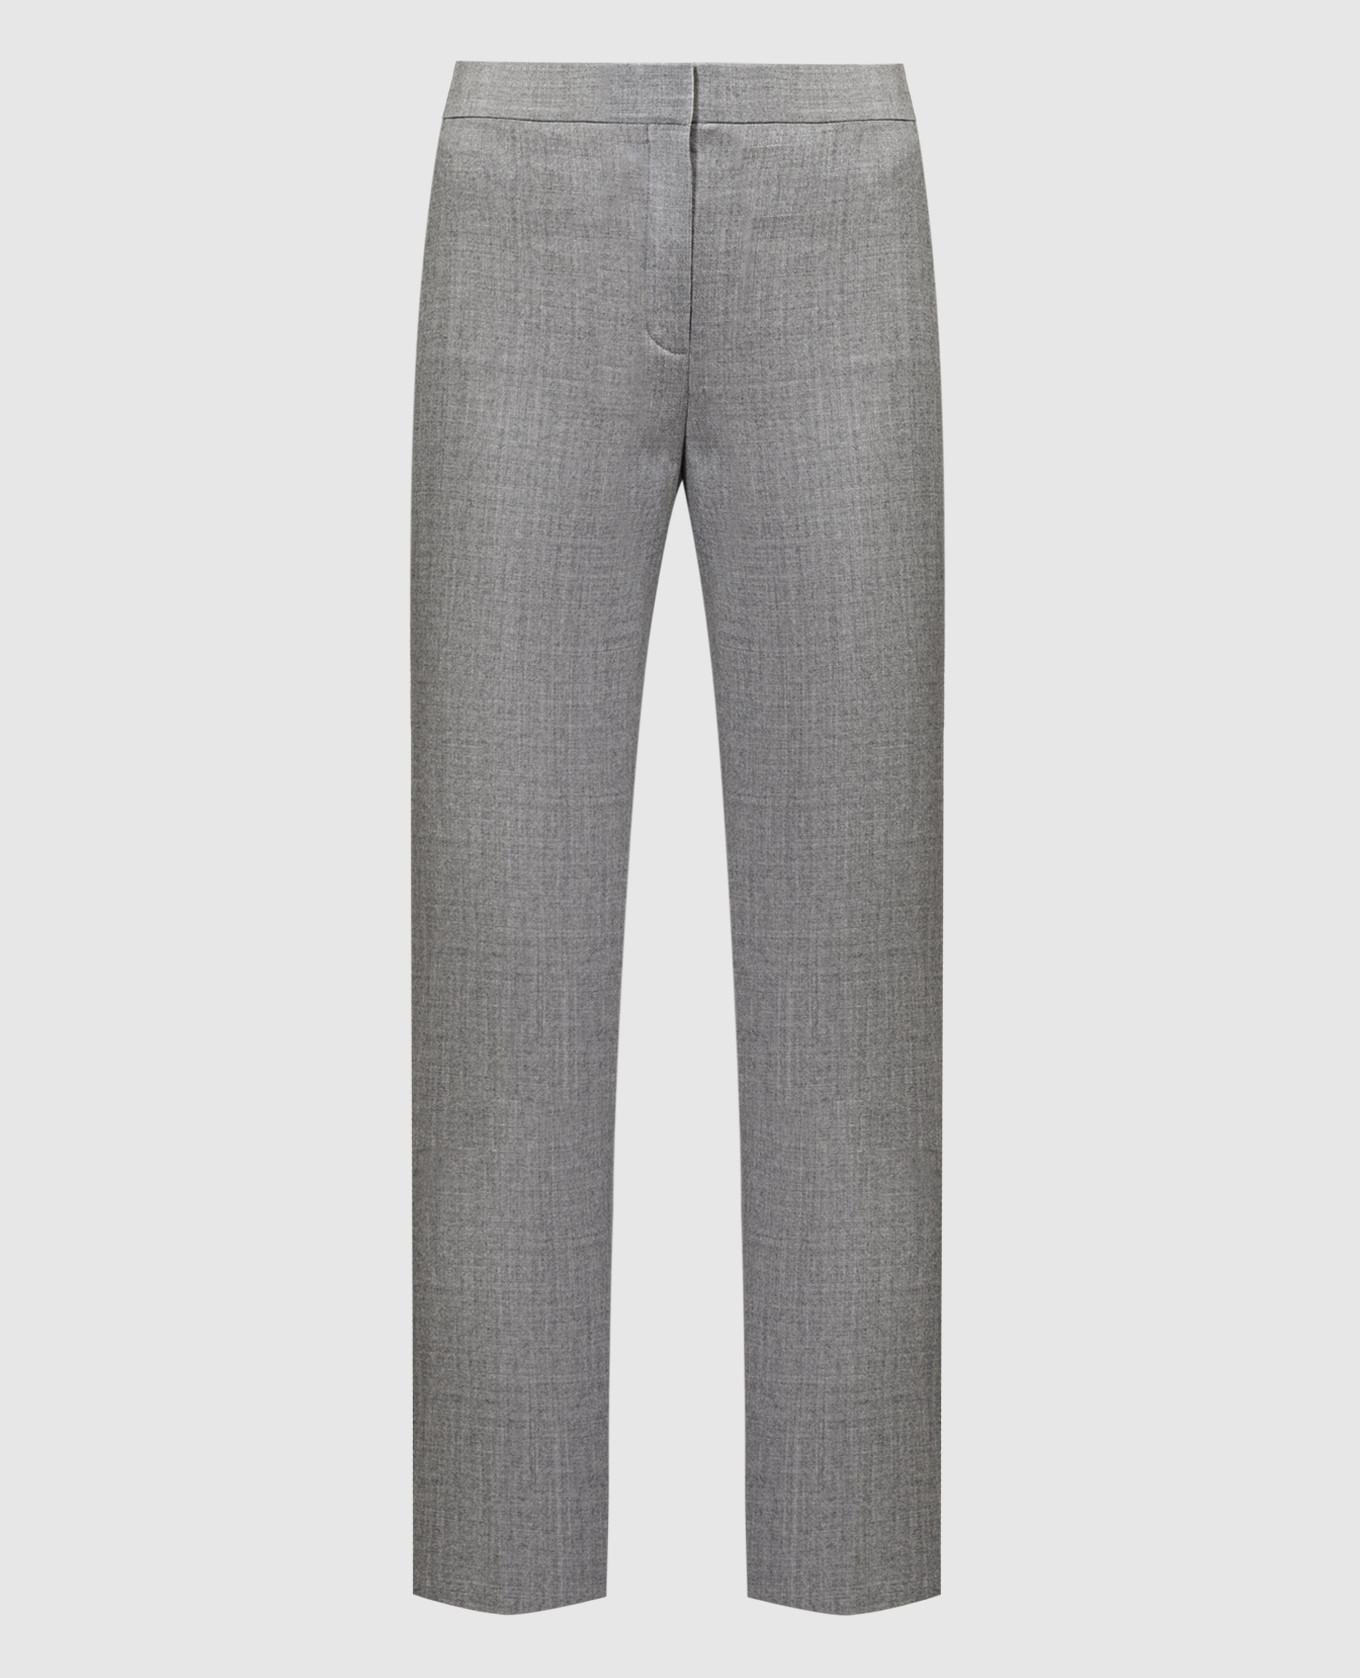 Gray pants made of wool